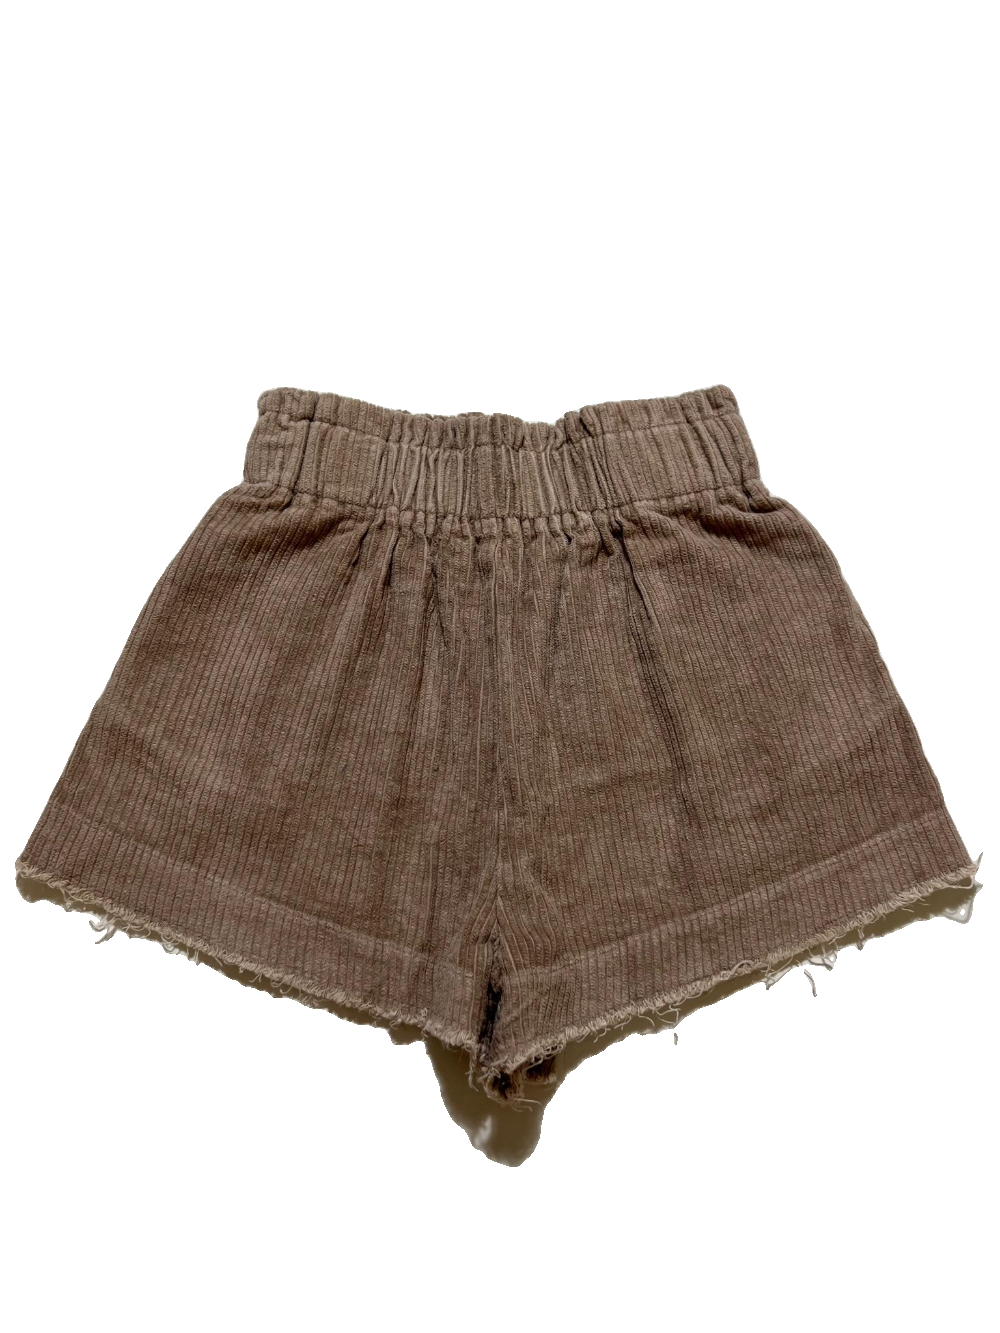 Etclet- Tan Shorts